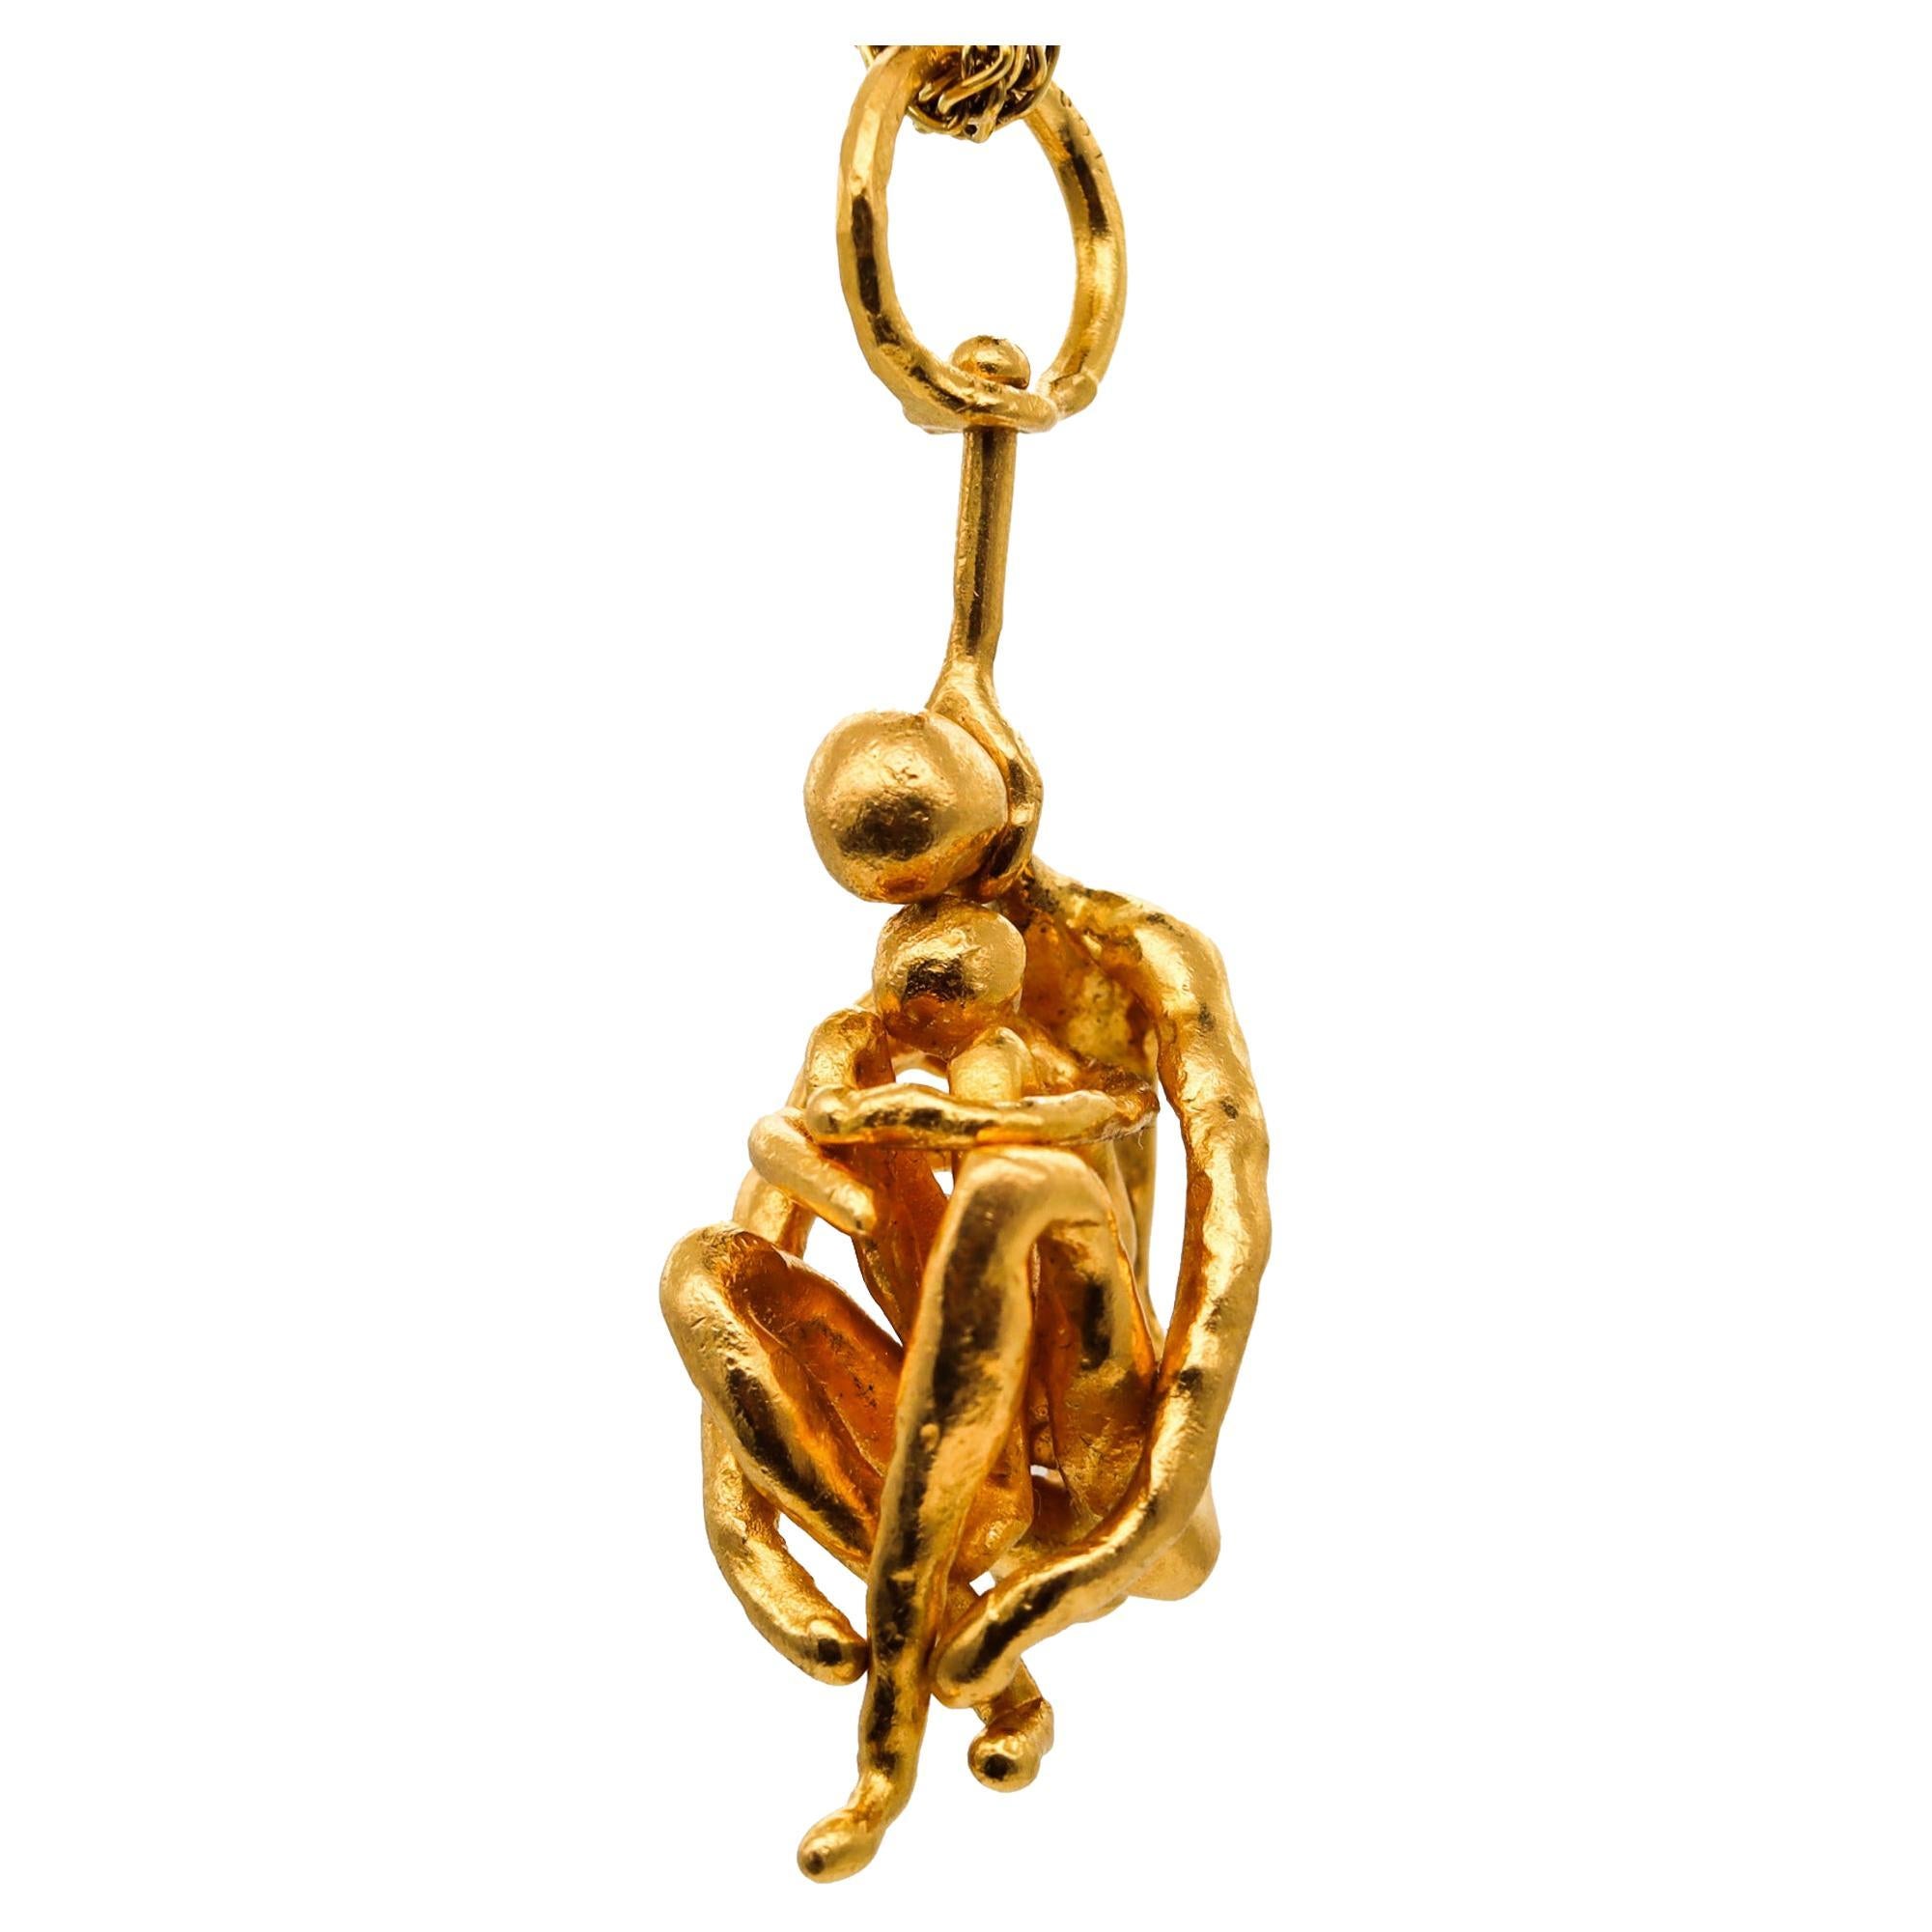 Jean Mahie 1970 Paris Rare Vintage Sculptural Maternity Pendant in 22kt Gold